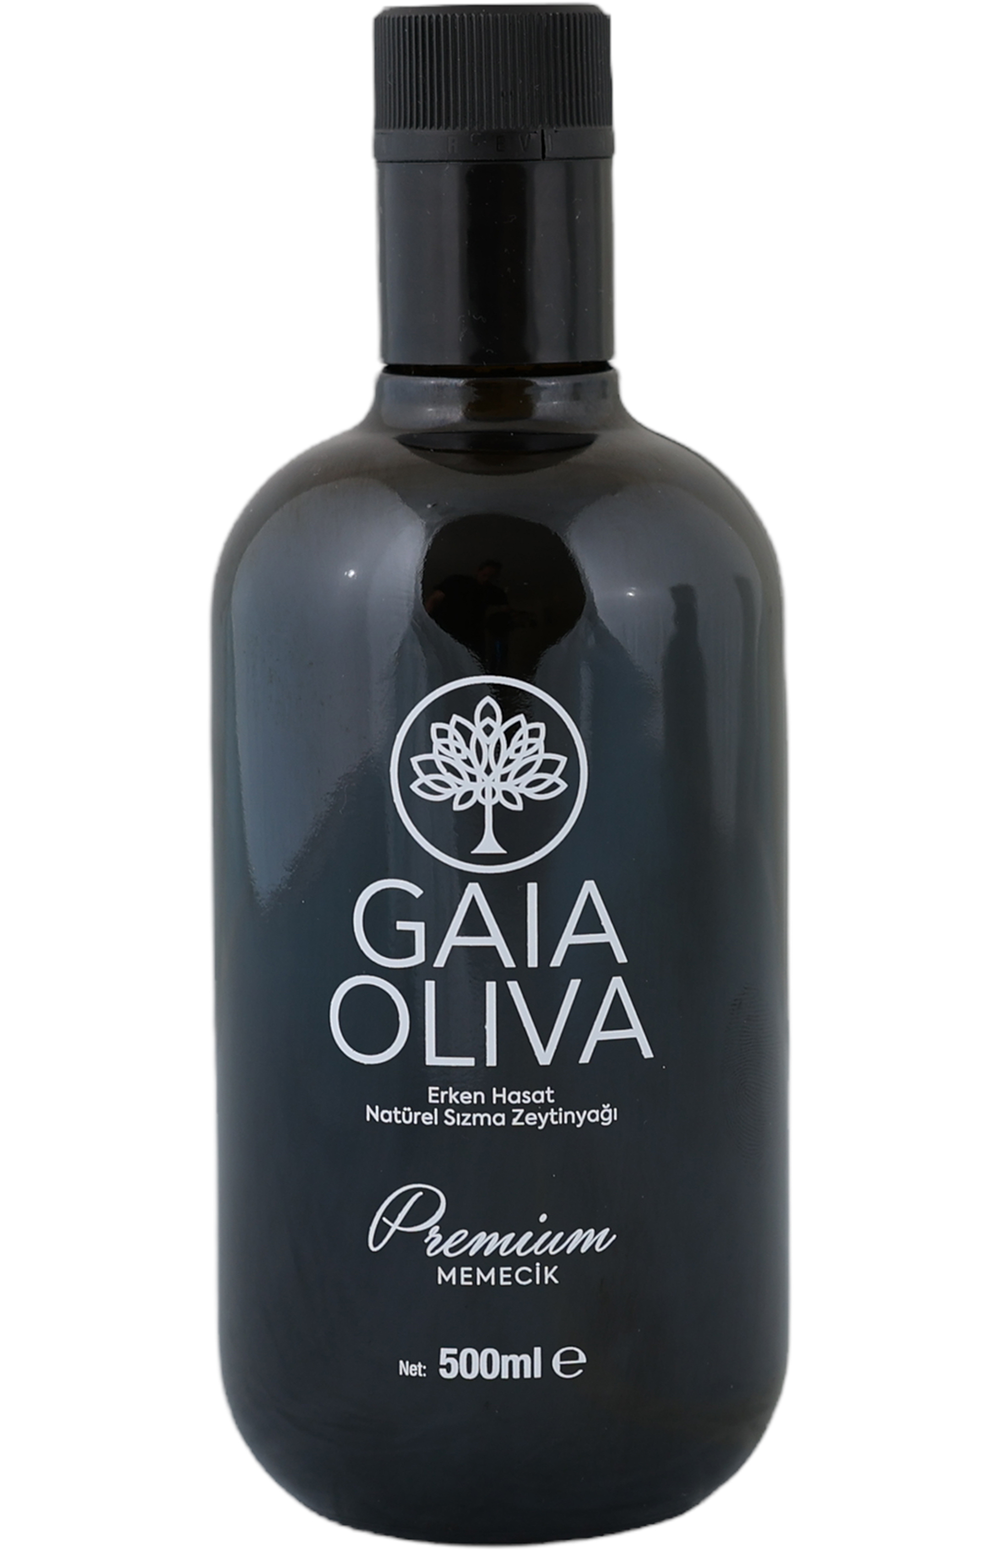 Gaia Oliva Extra Virgin Olive Oil